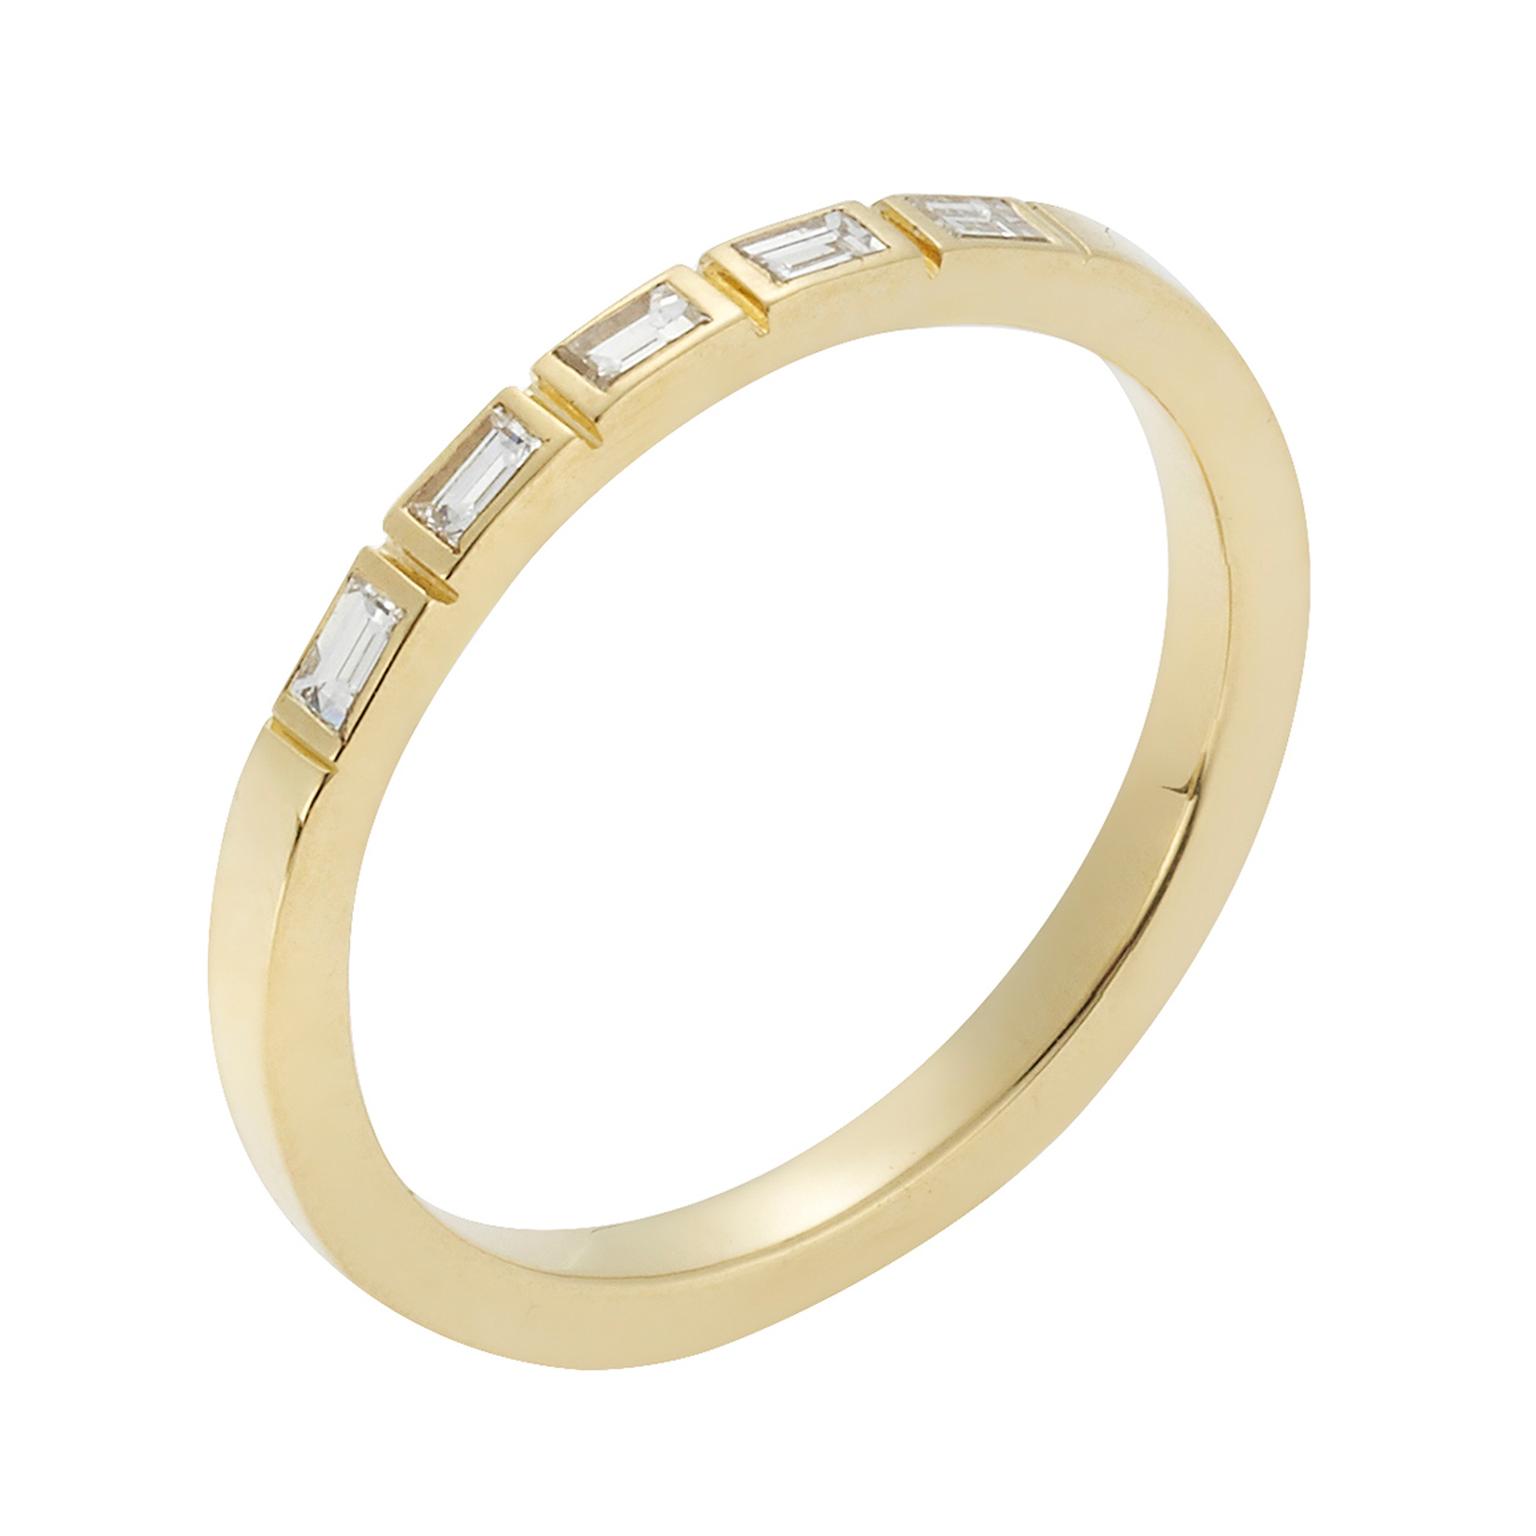 Ileana Makri yellow gold eternity ring with baguette diamonds